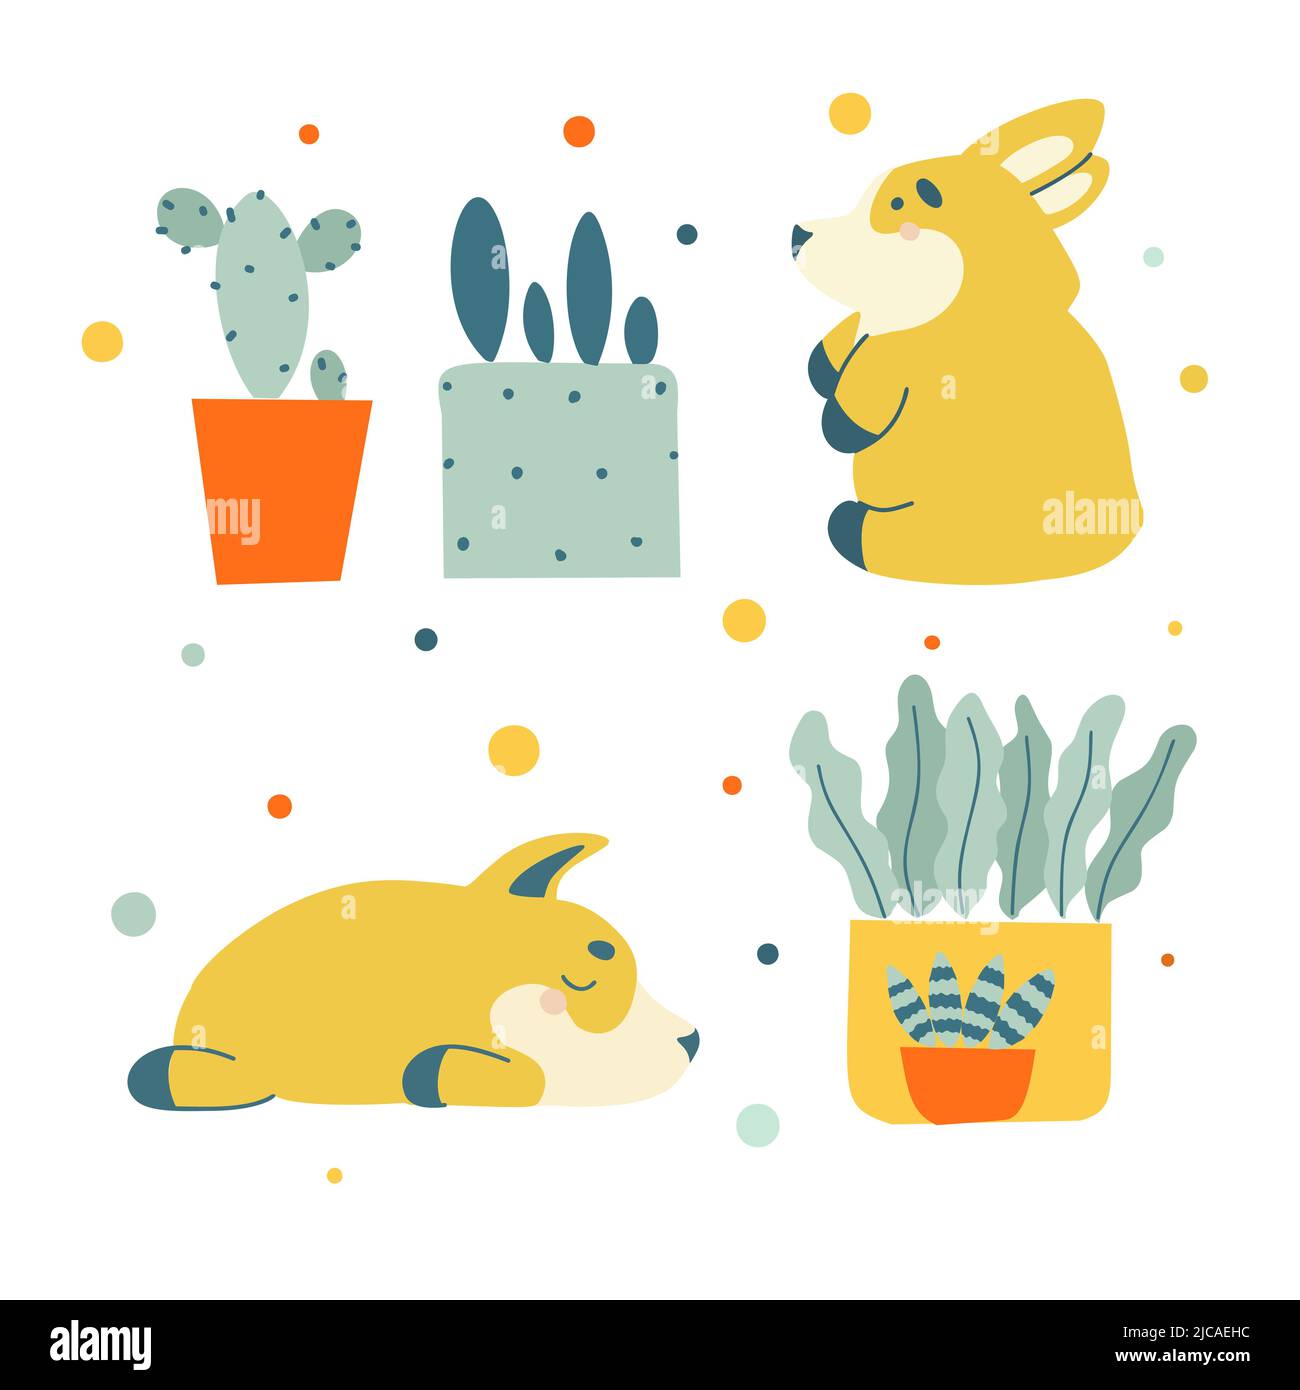 Flat set with happy small dog corgi, green cactuses. Stock Vector